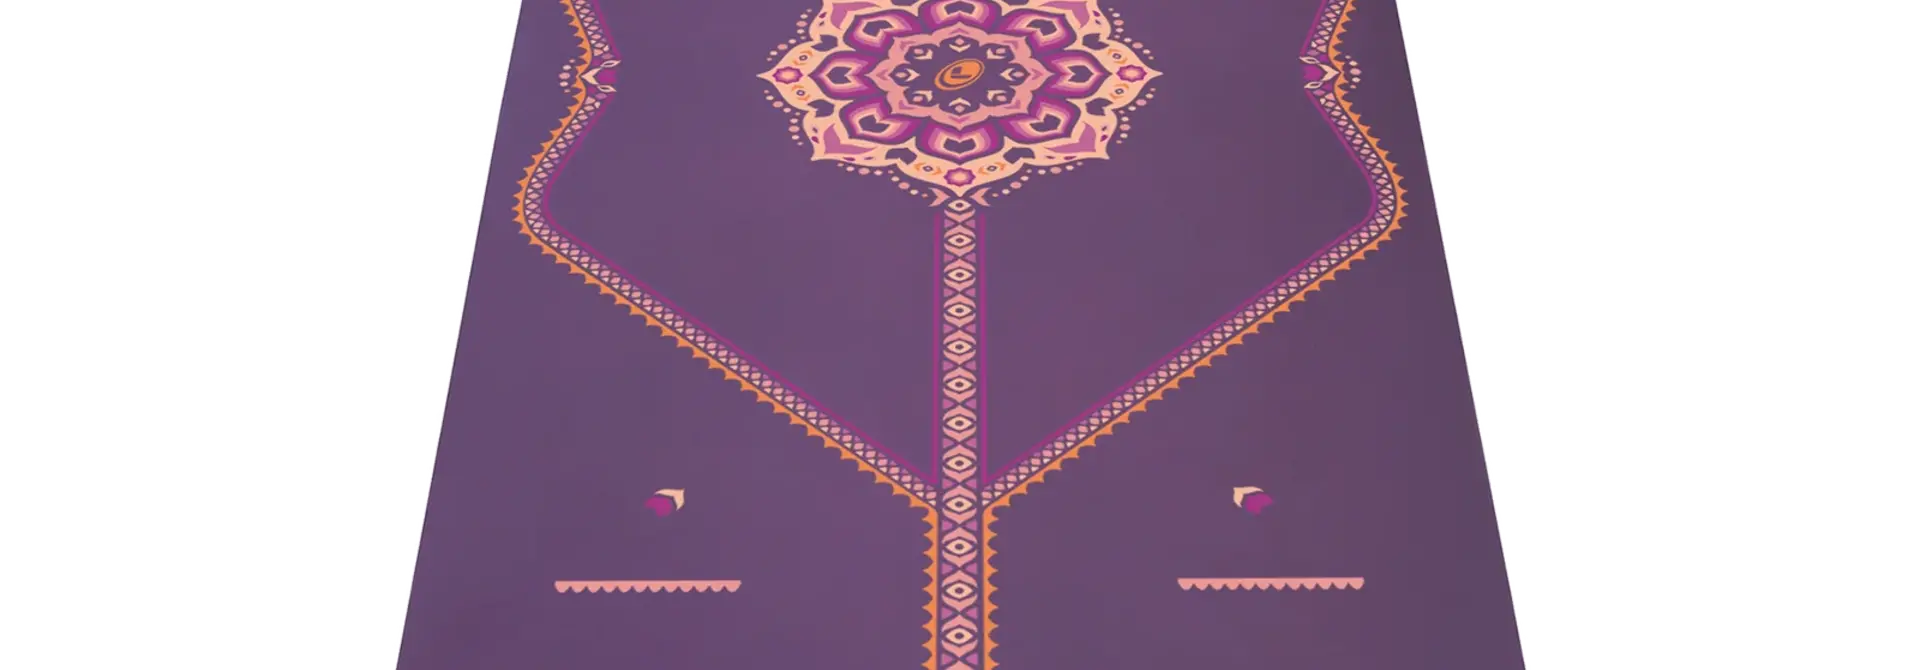 Liforme Yoga Mat - Blossoming Lotus Purple